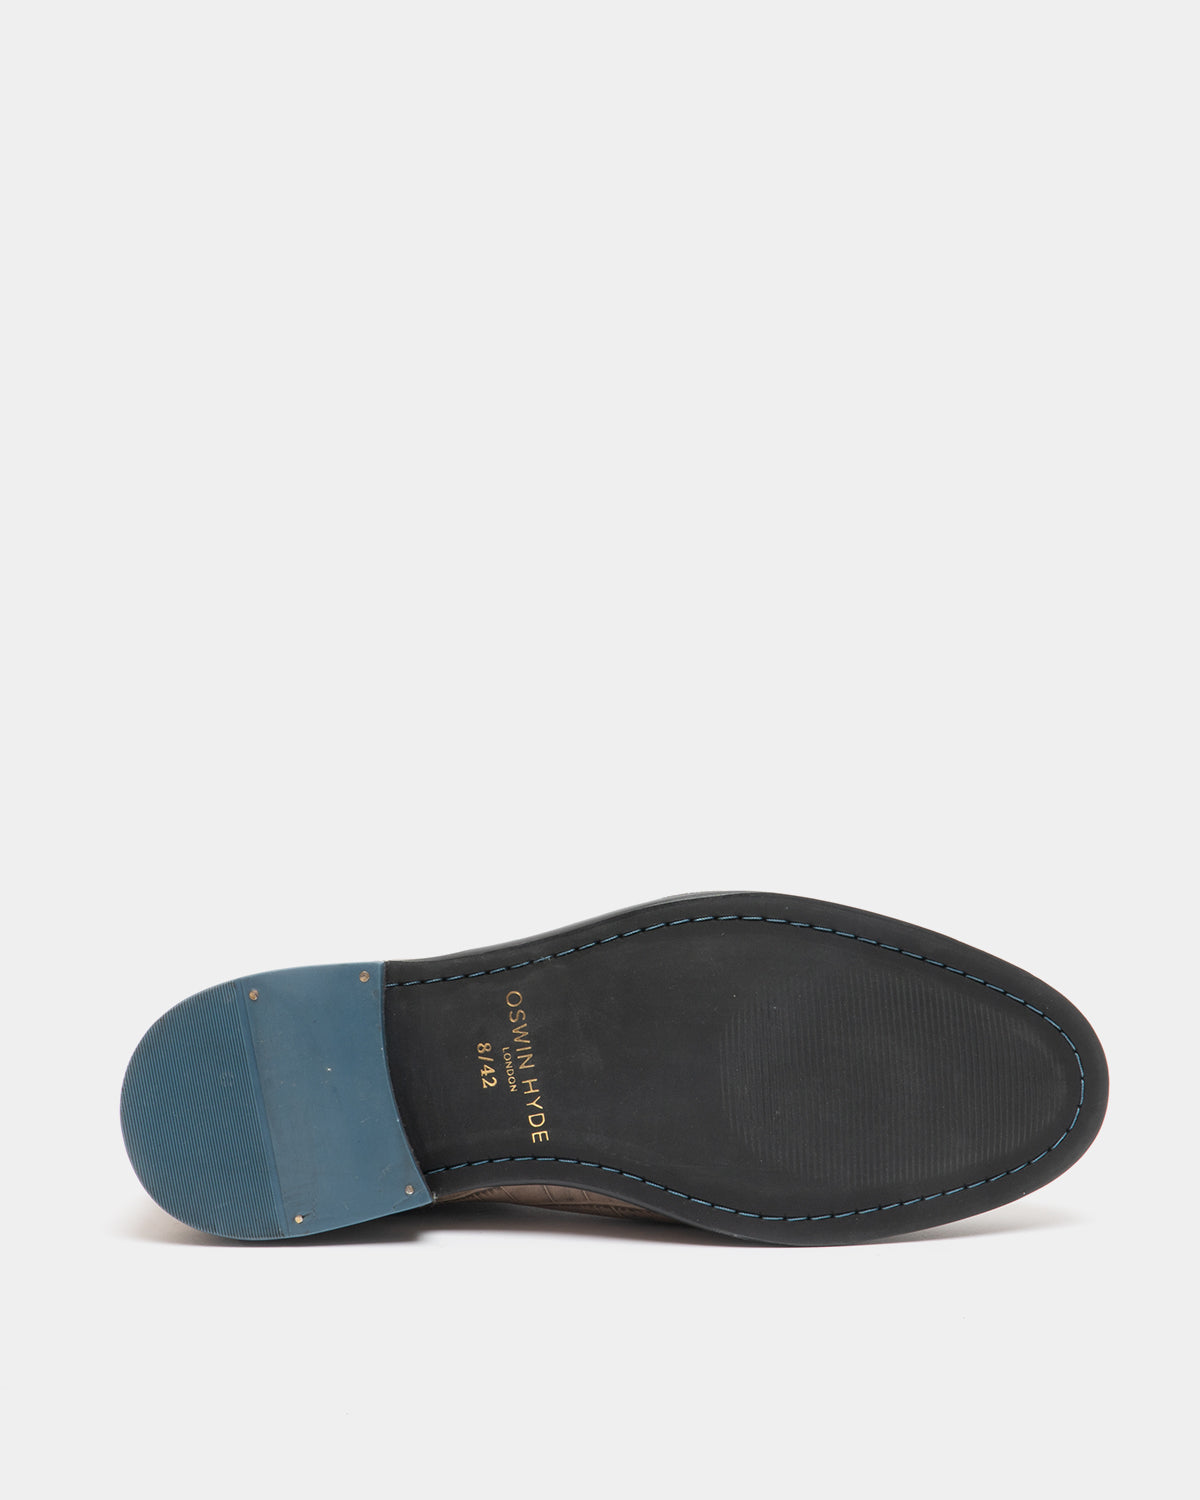 sole of Men's grey croc leather Chelsea boot